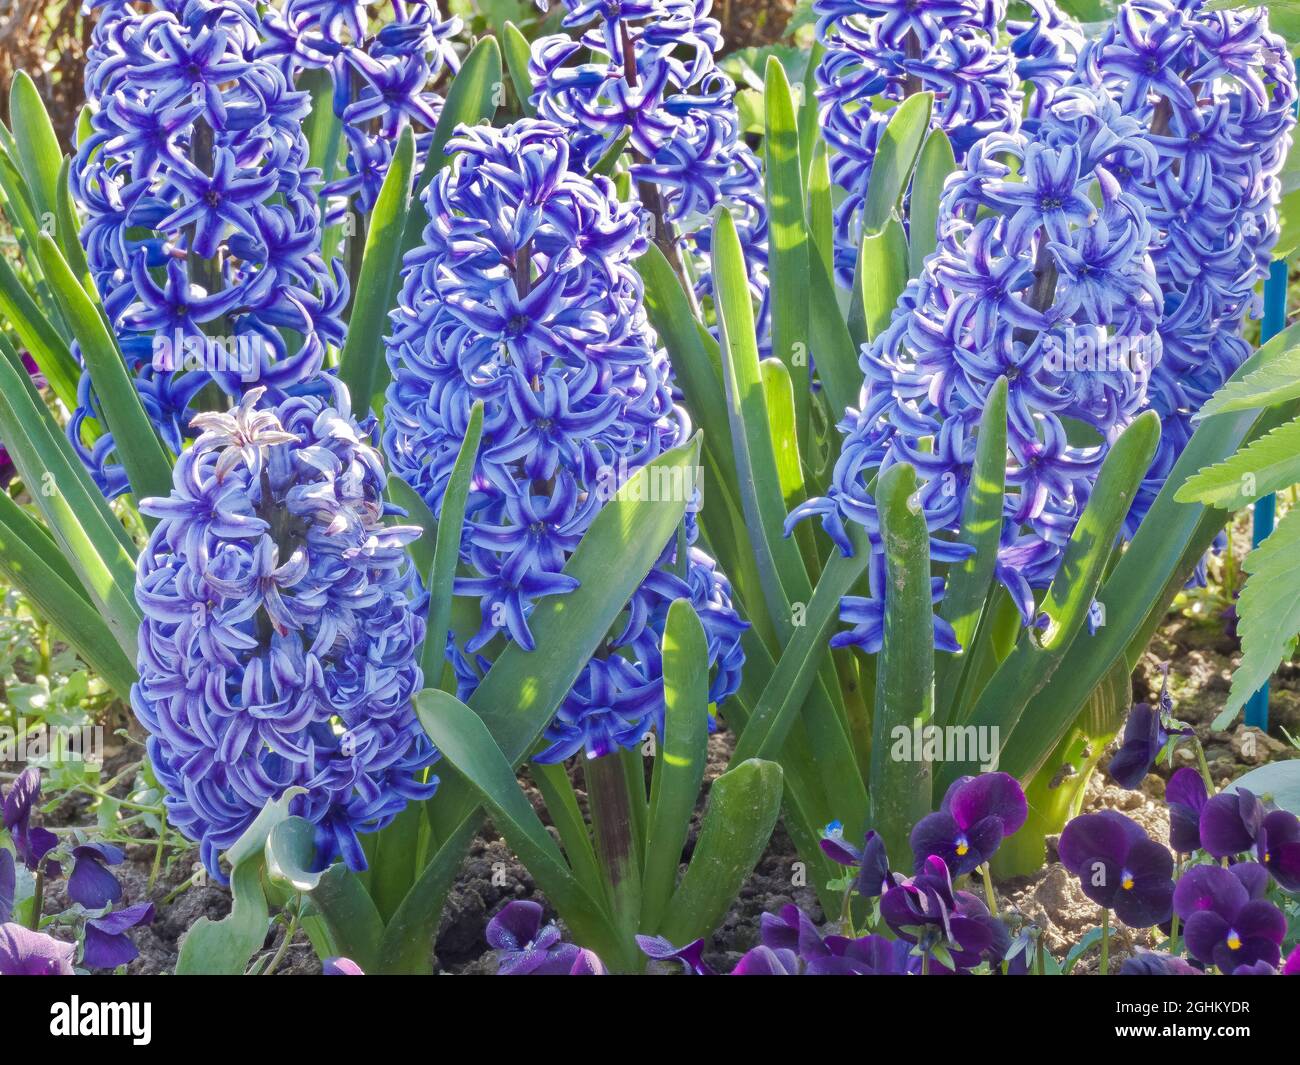 Jacinthe 'Peter Stuyvesant' en fleur dans un jardin Photo Stock - Alamy